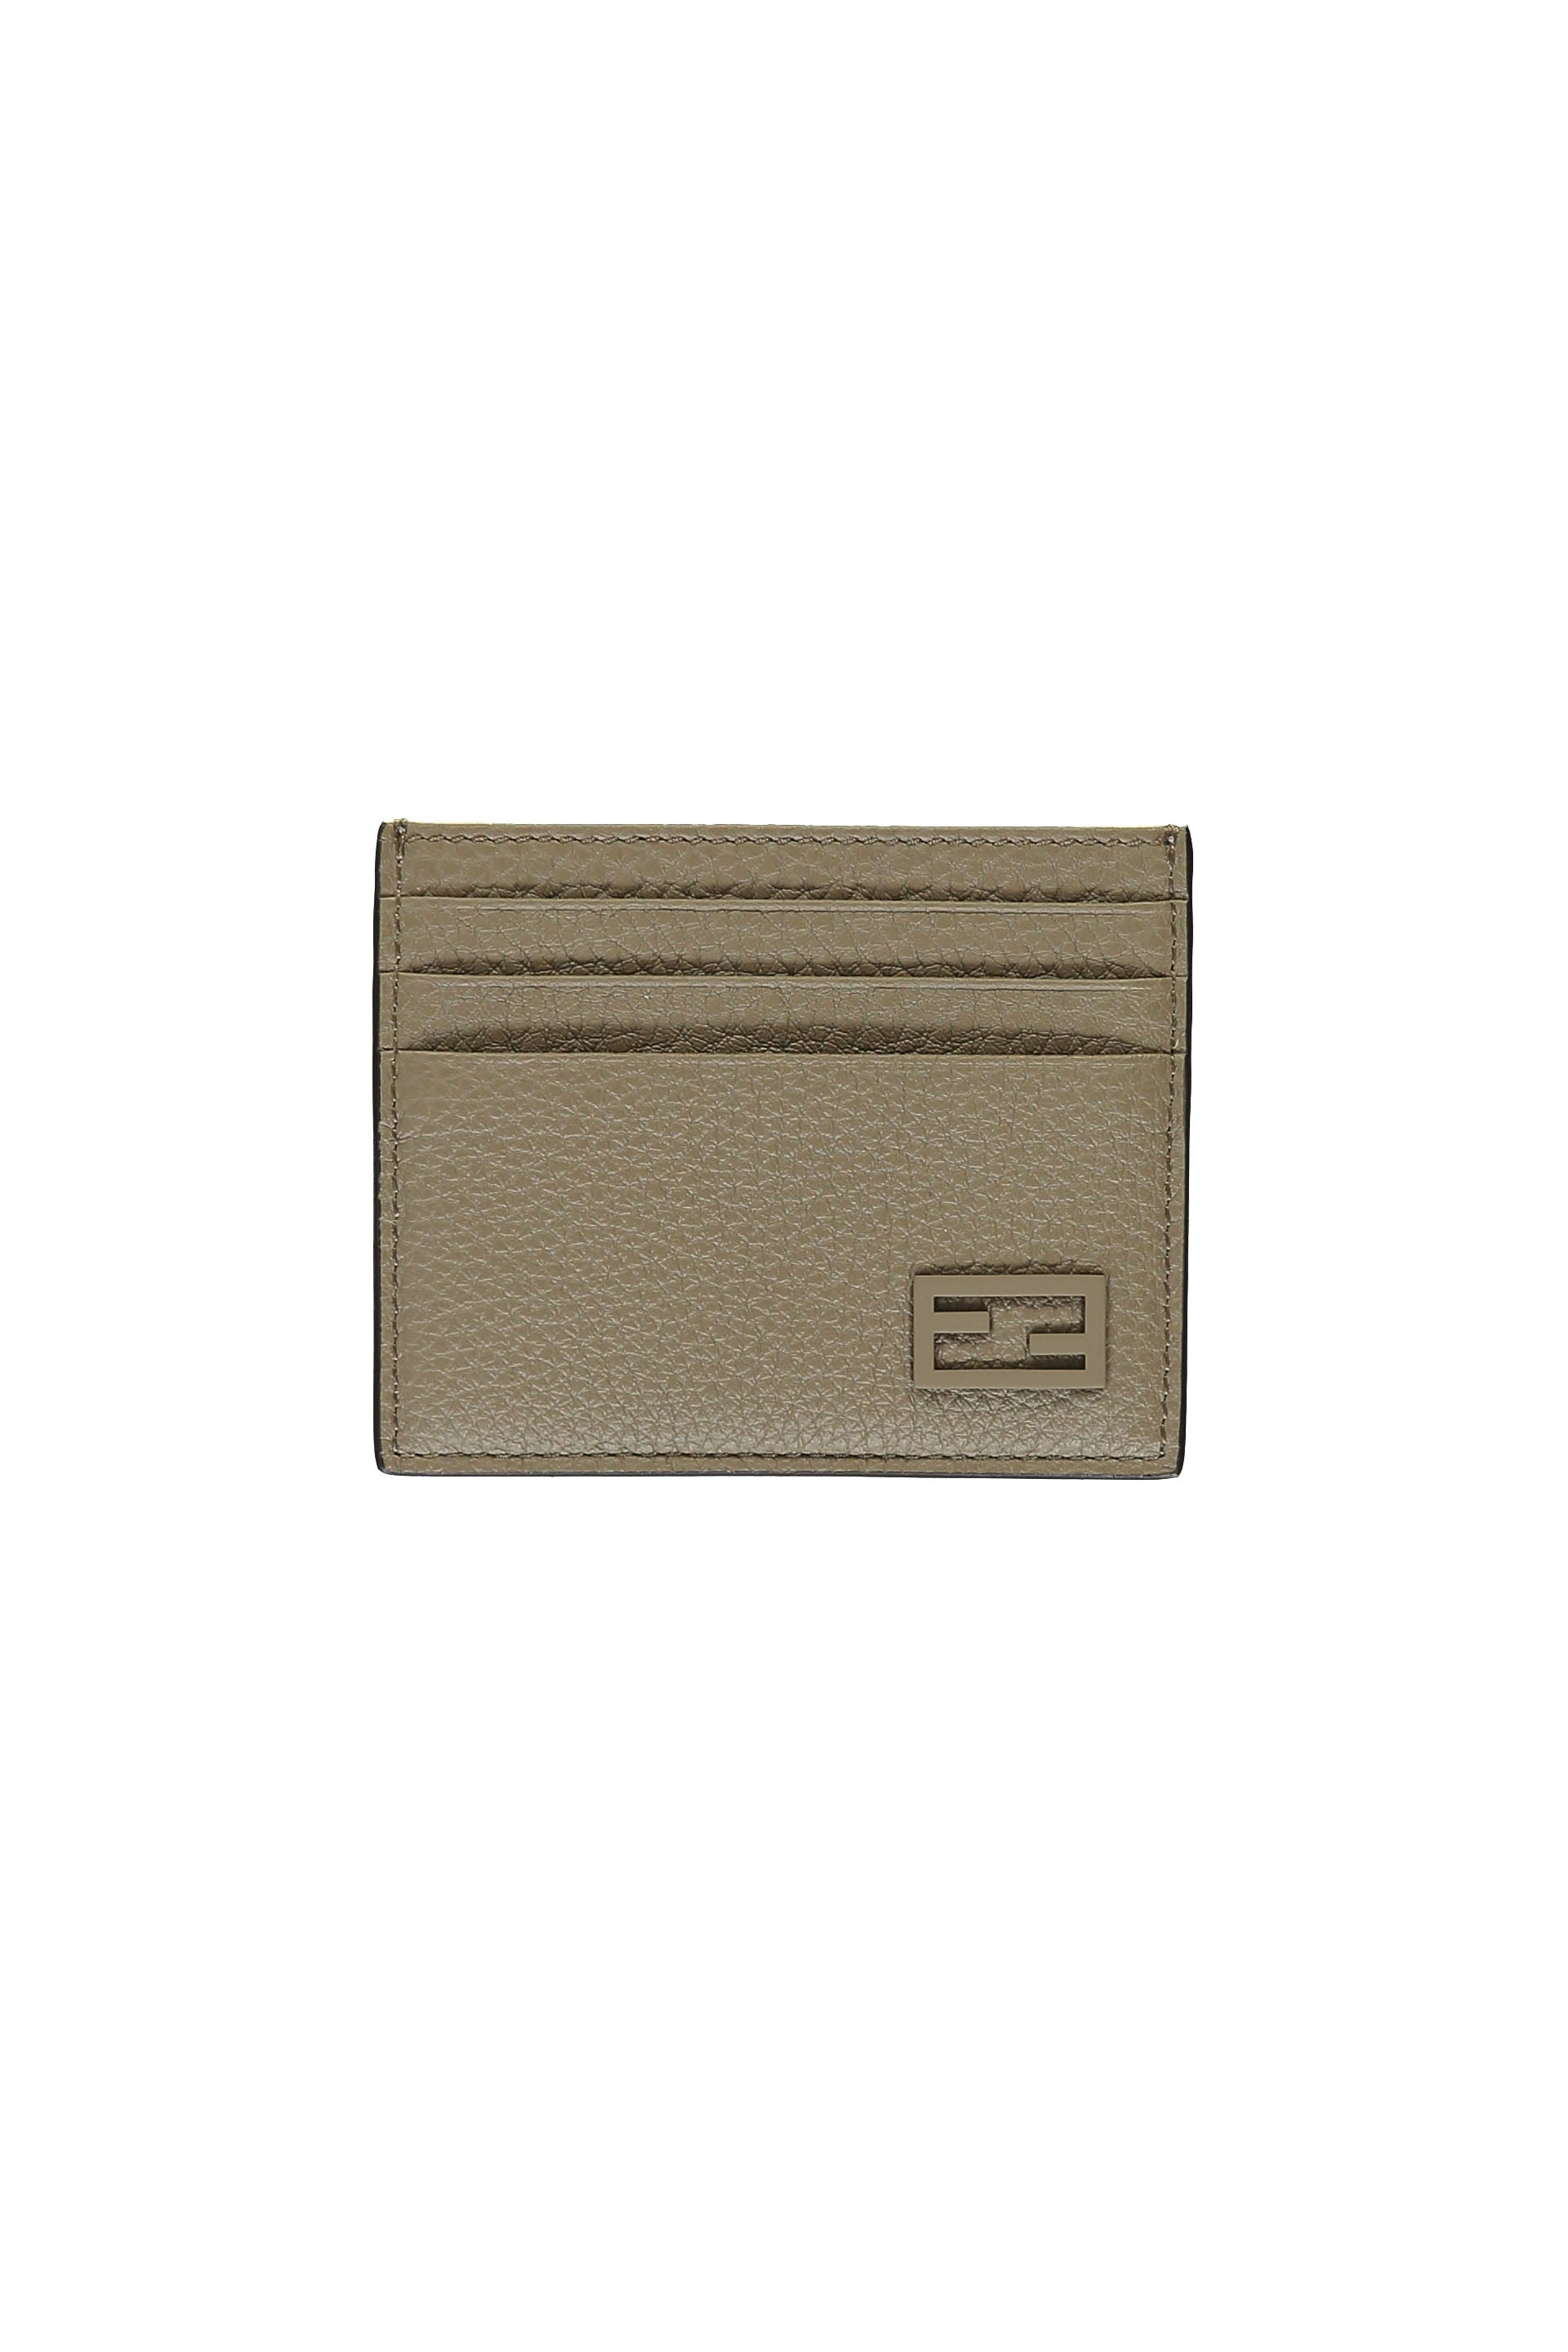 Leather card holder-Fendi-OUTLET-SALE-TU-ARCHIVIST